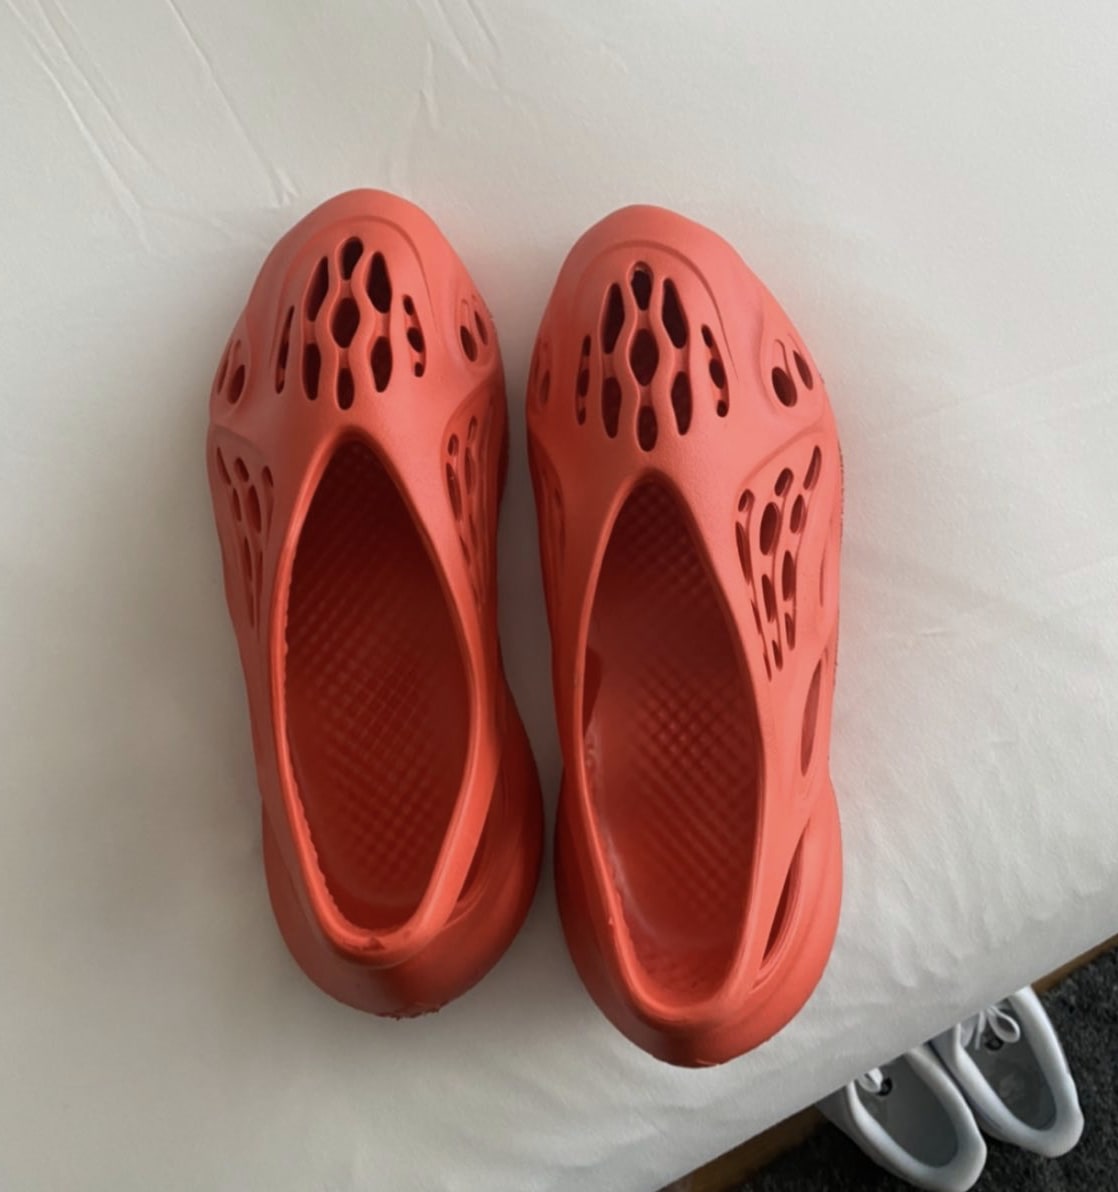 Adidas Yeezy Foam Runner Release Date 2020 | Sole Collector